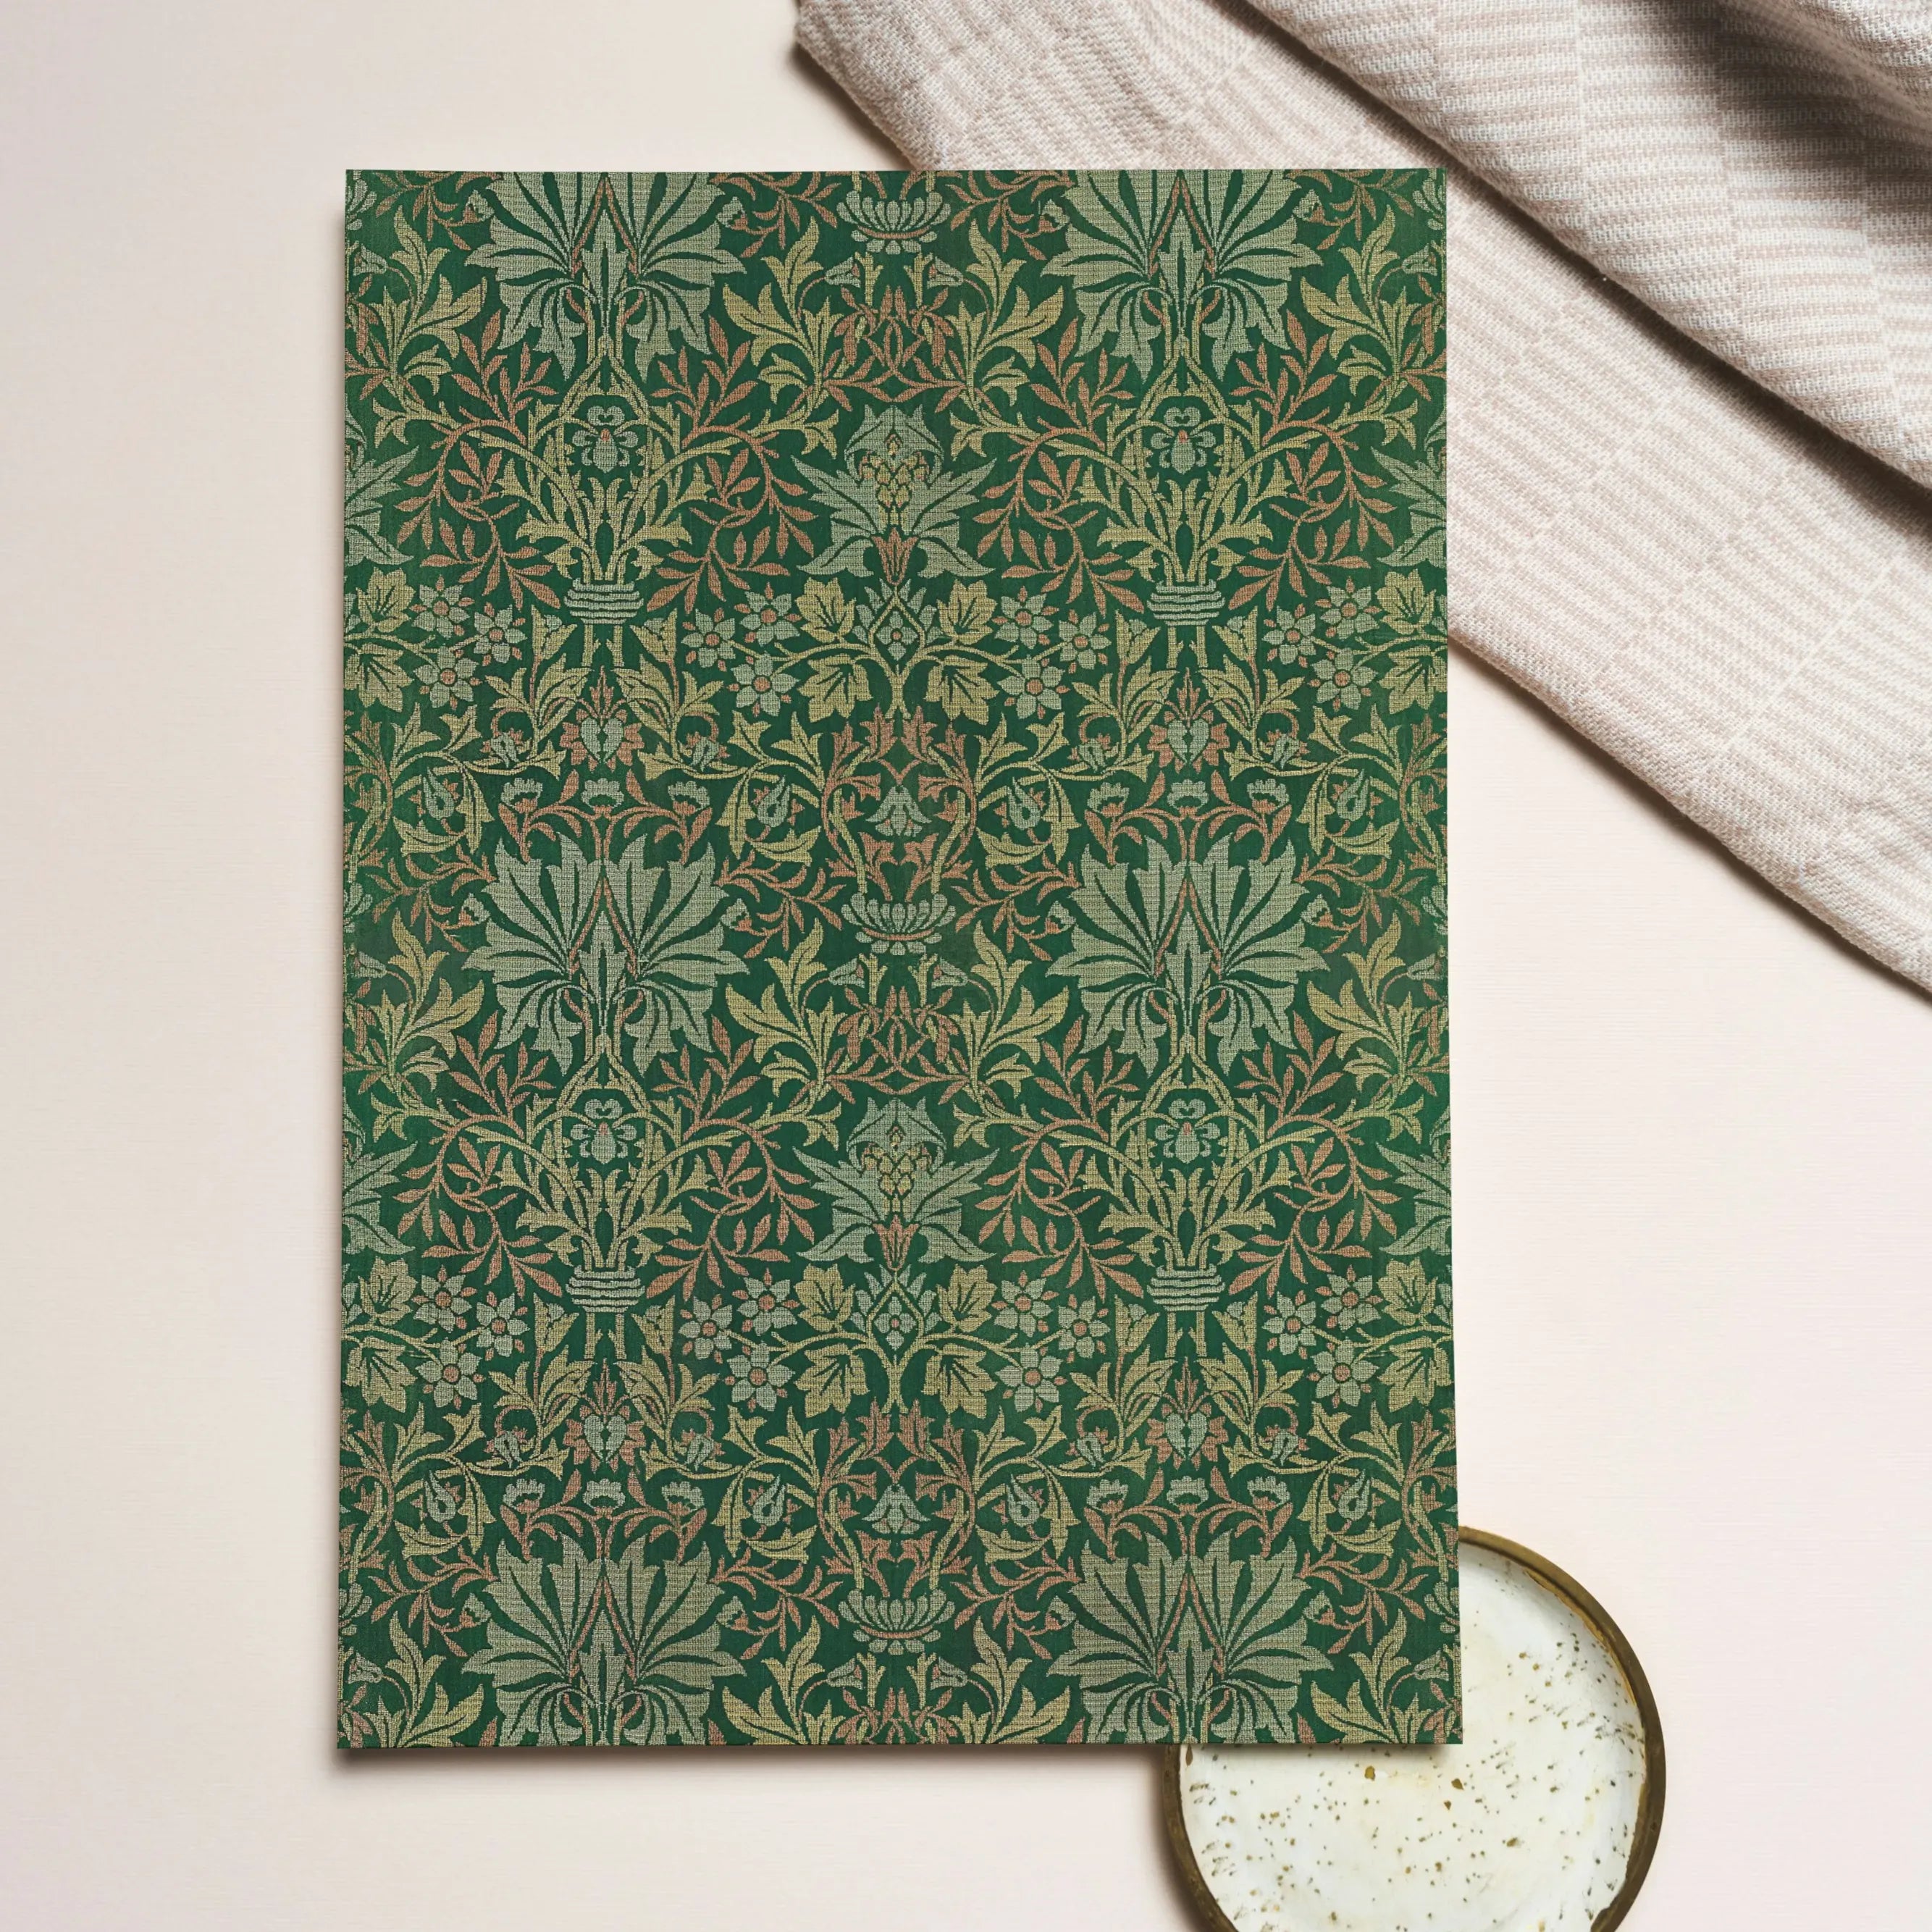 Flower Garden - William Morris Greeting Card - Greeting & Note Cards - Aesthetic Art